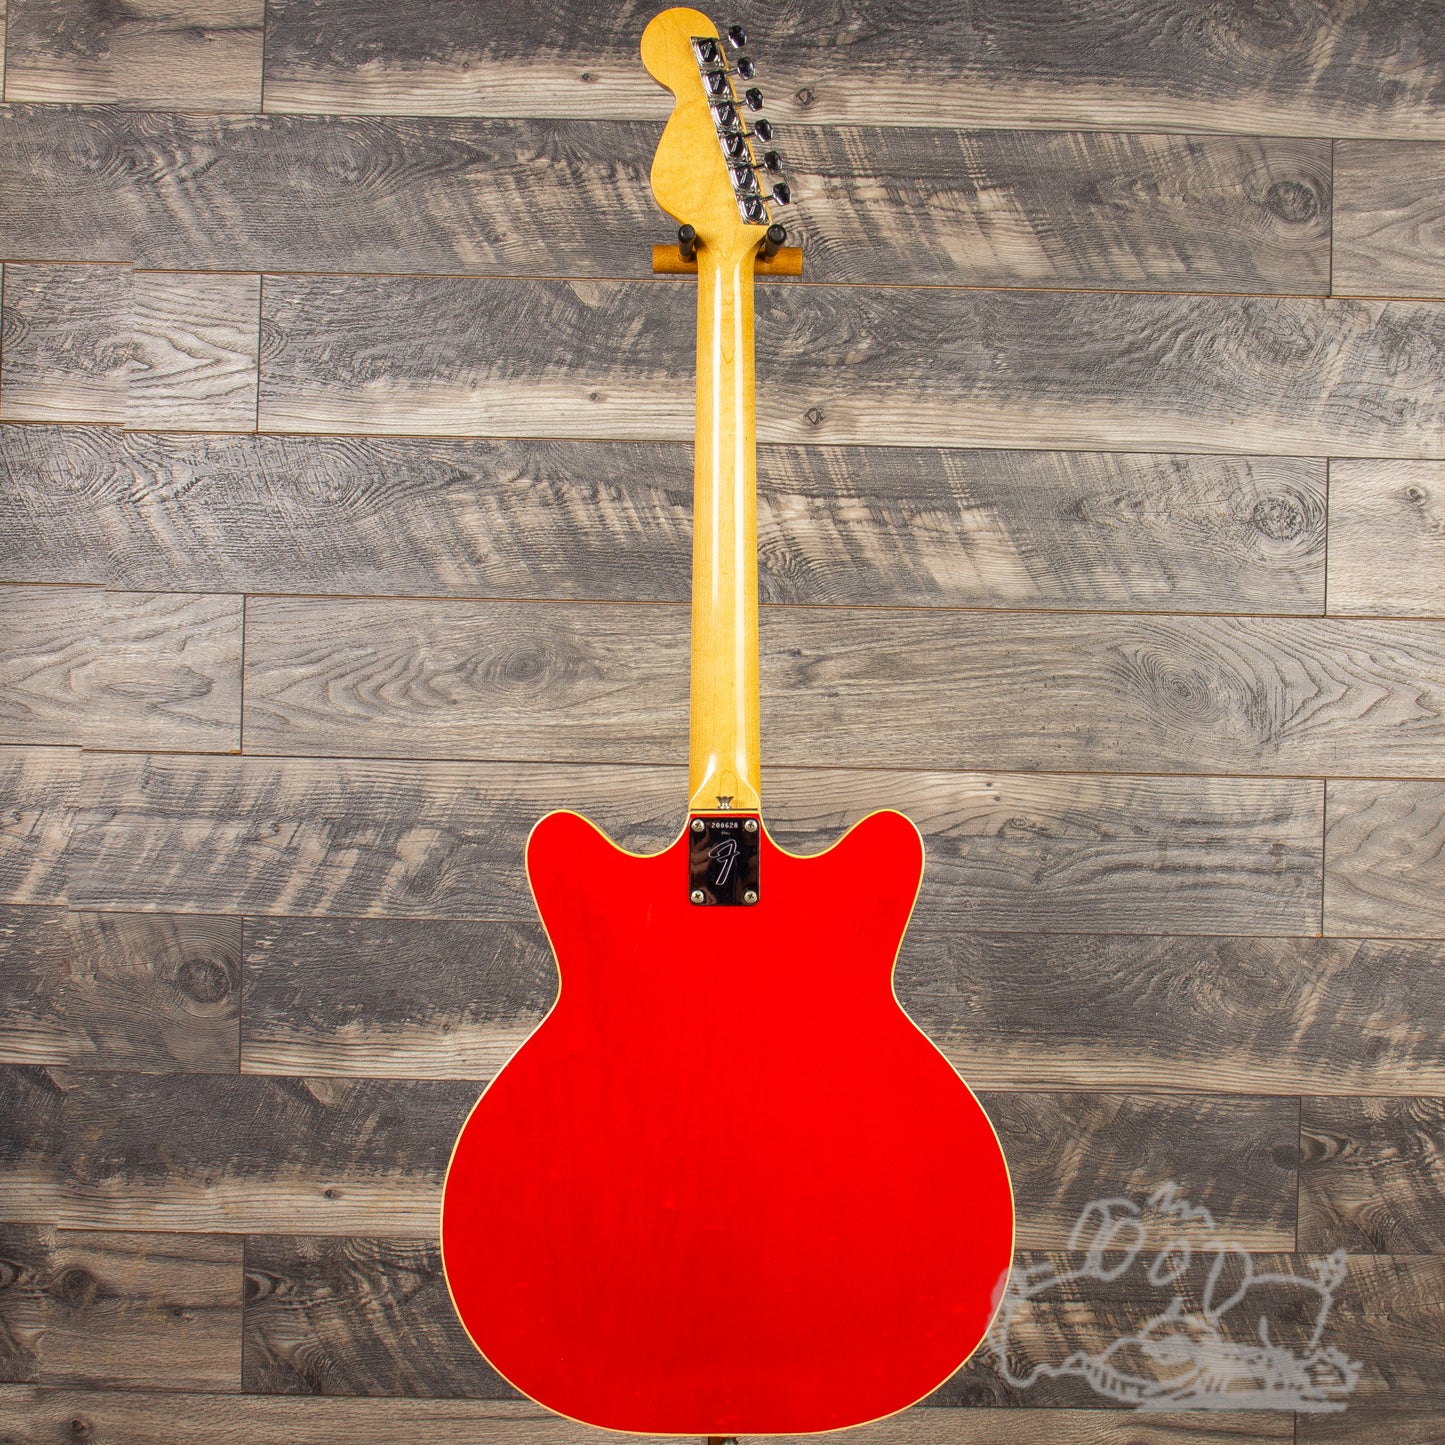 1967 Fender Cornado II - Cherry Red